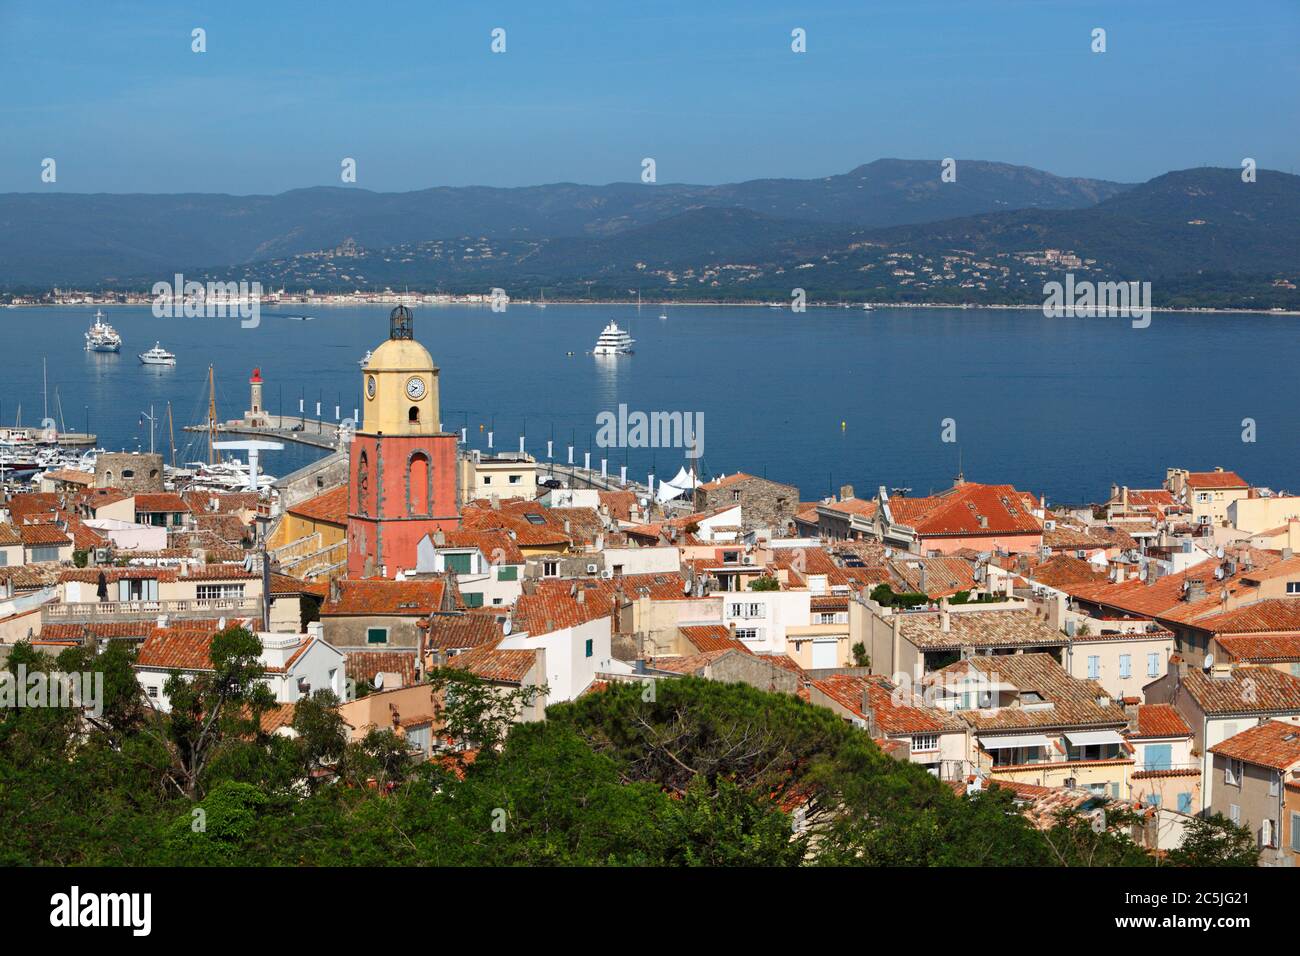 View over old town, Saint-Tropez, Var, Provence-Alpes-Cote d'Azur, France, Europe Stock Photo